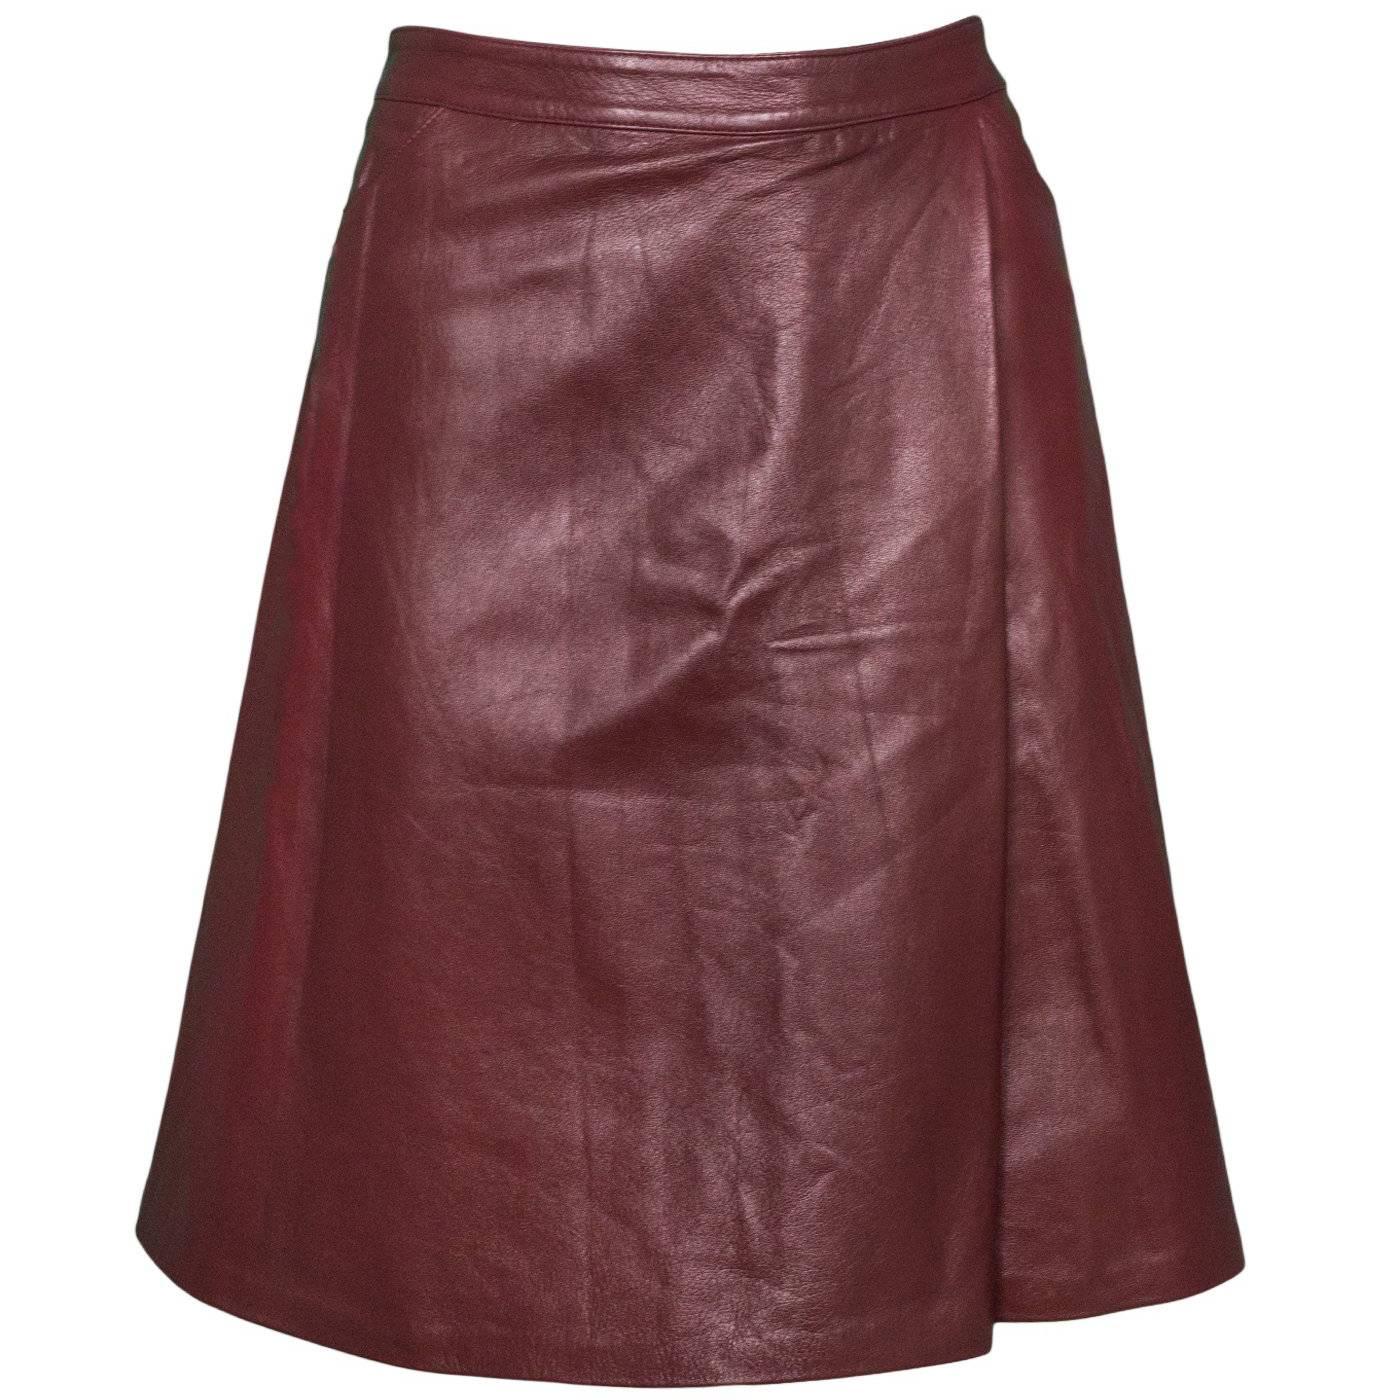 Luca Luca Burgundy Leather Skirt Sz 10